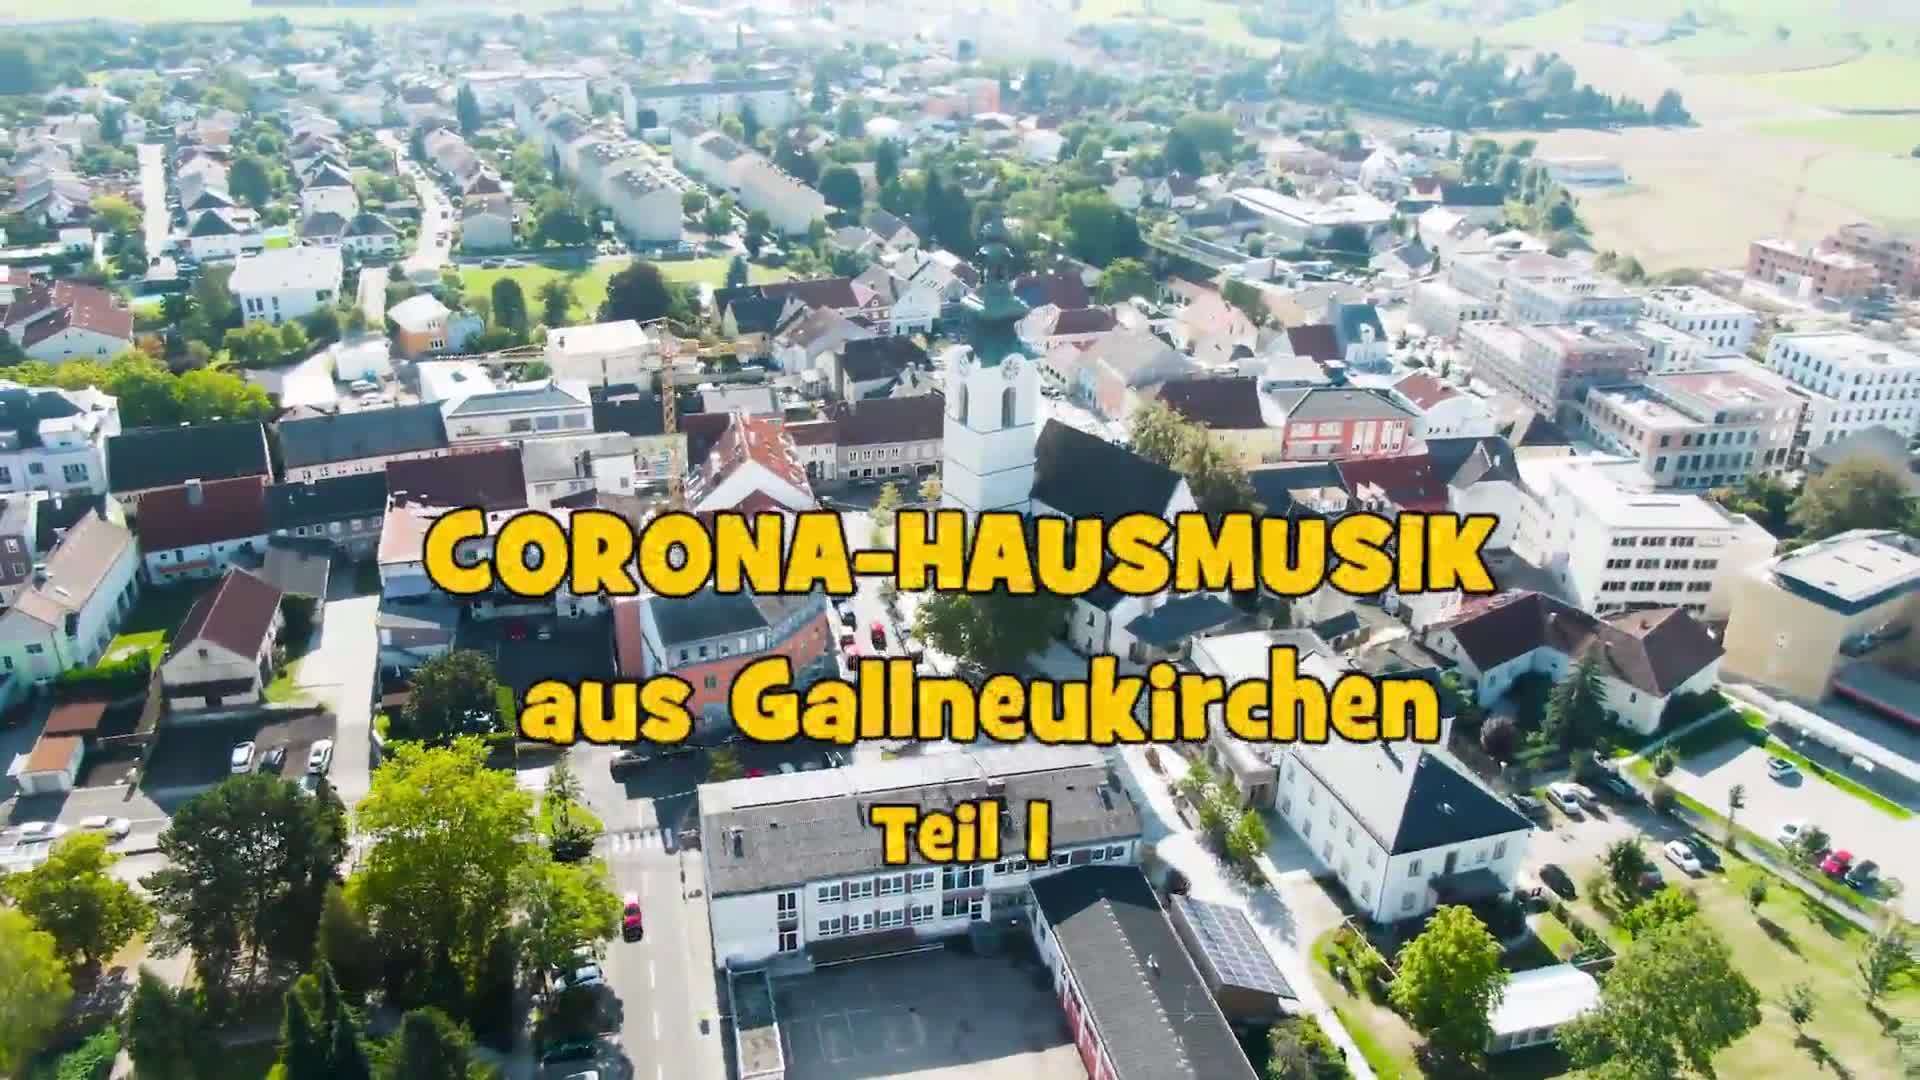 Corona - Hausmusik aus Gallneukirchen, Teil 1